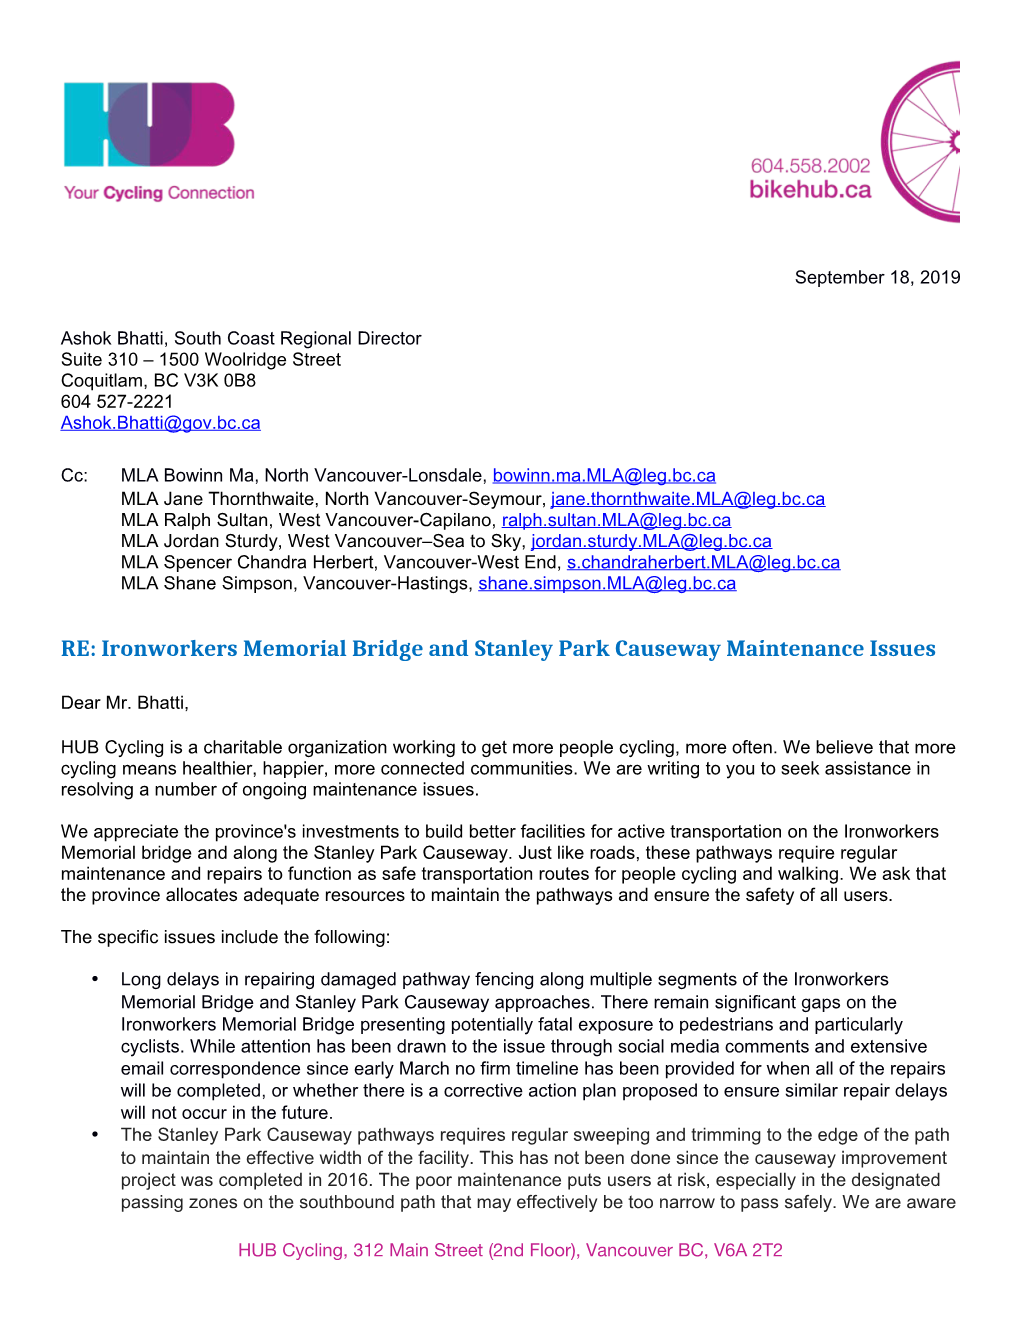 Ironworkers Memorial Bridge and Stanley Park Causeway Maintenance Issues